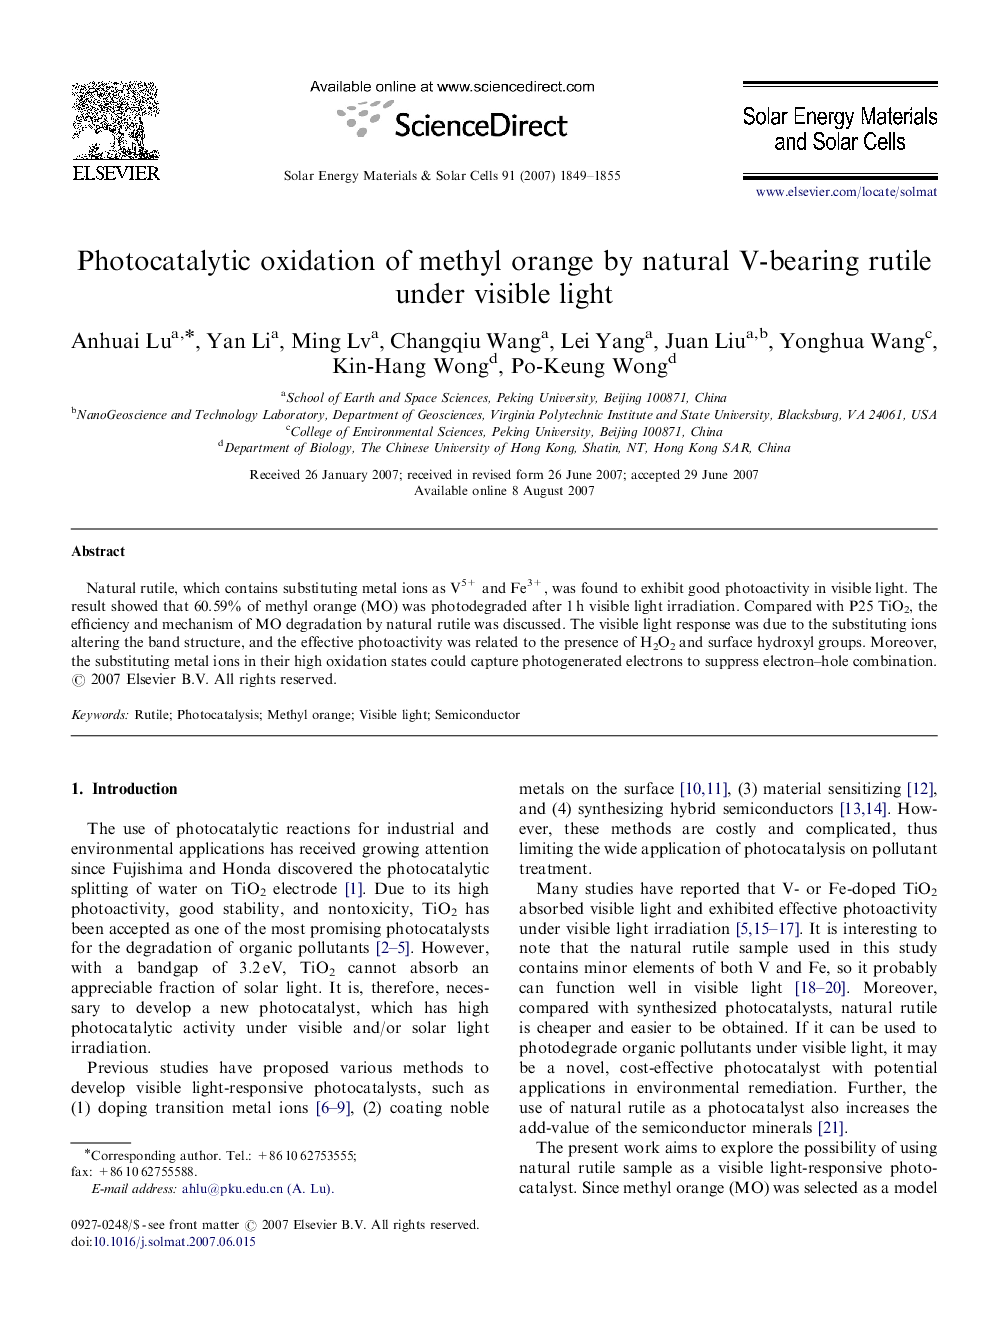 Photocatalytic oxidation of methyl orange by natural V-bearing rutile under visible light